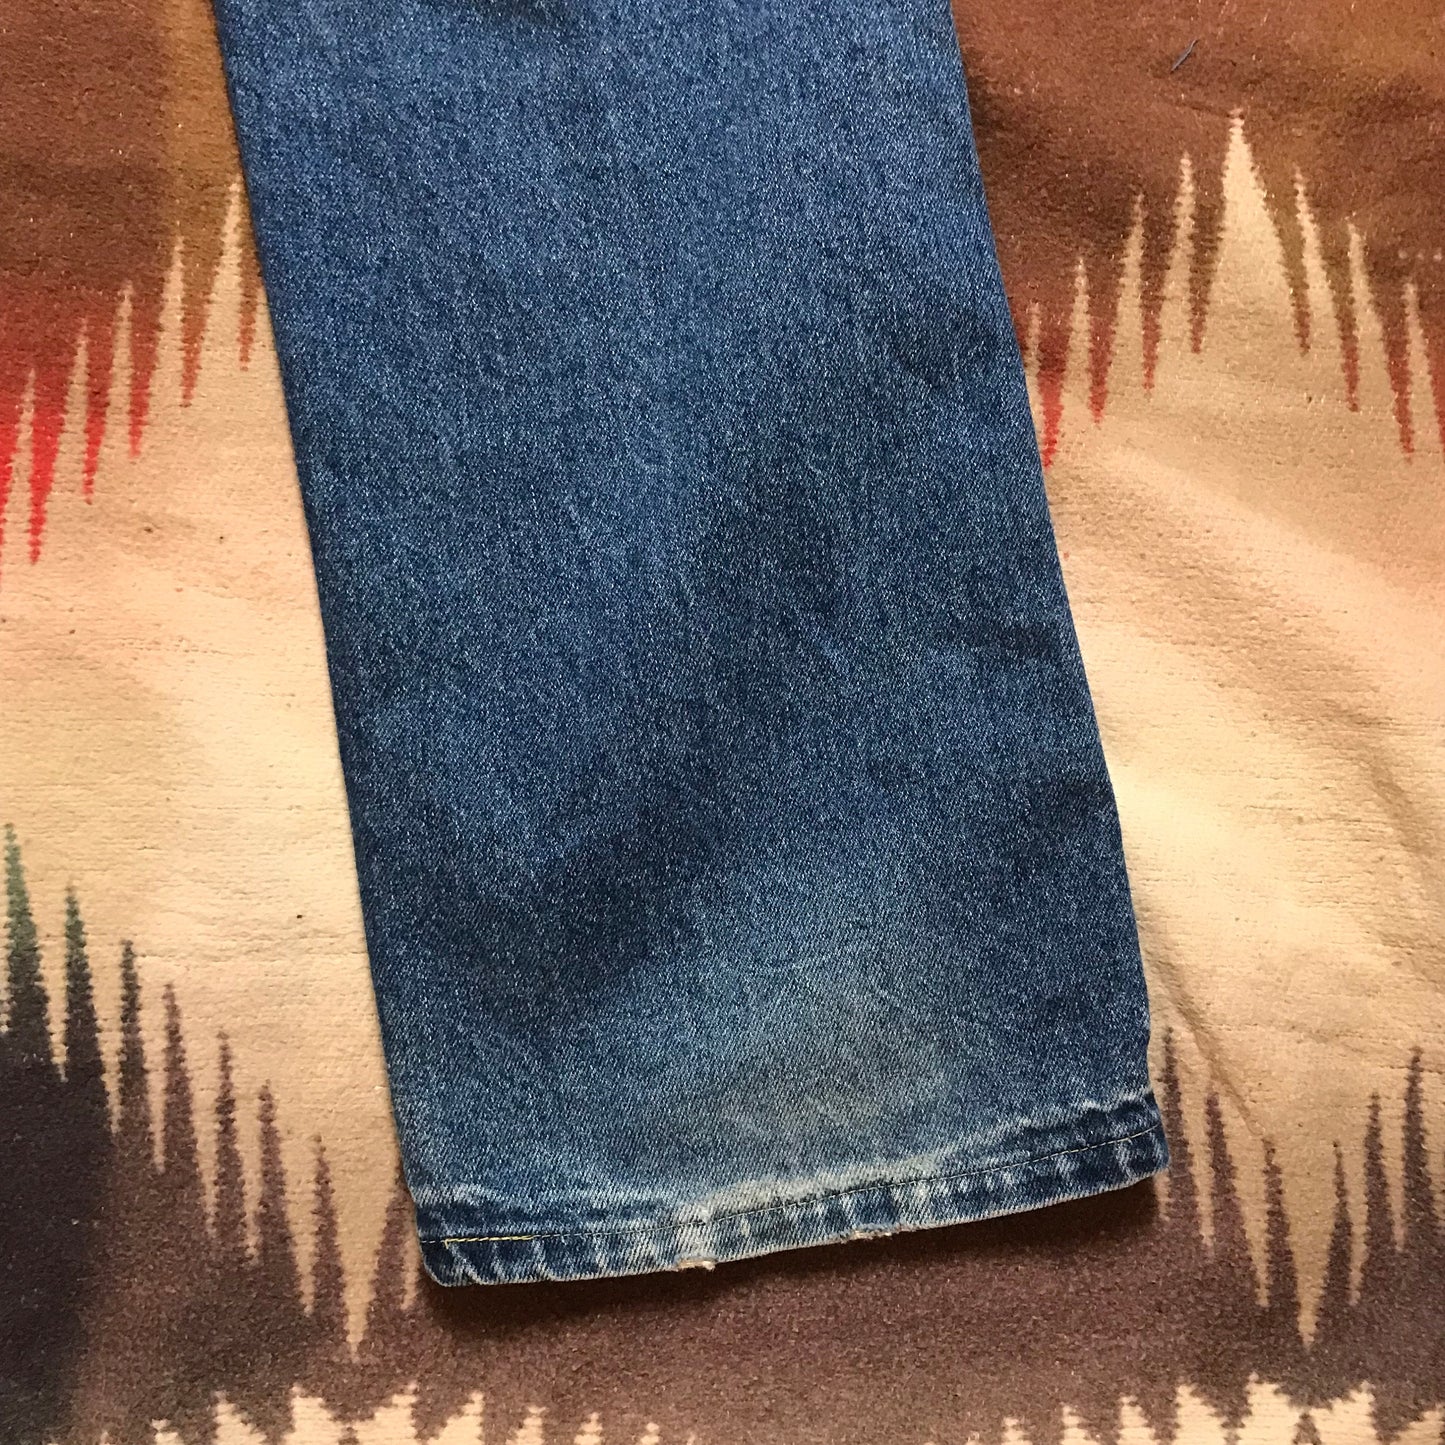 1970s Big Yank Denim Jeans Made in USA Size 29x27.5